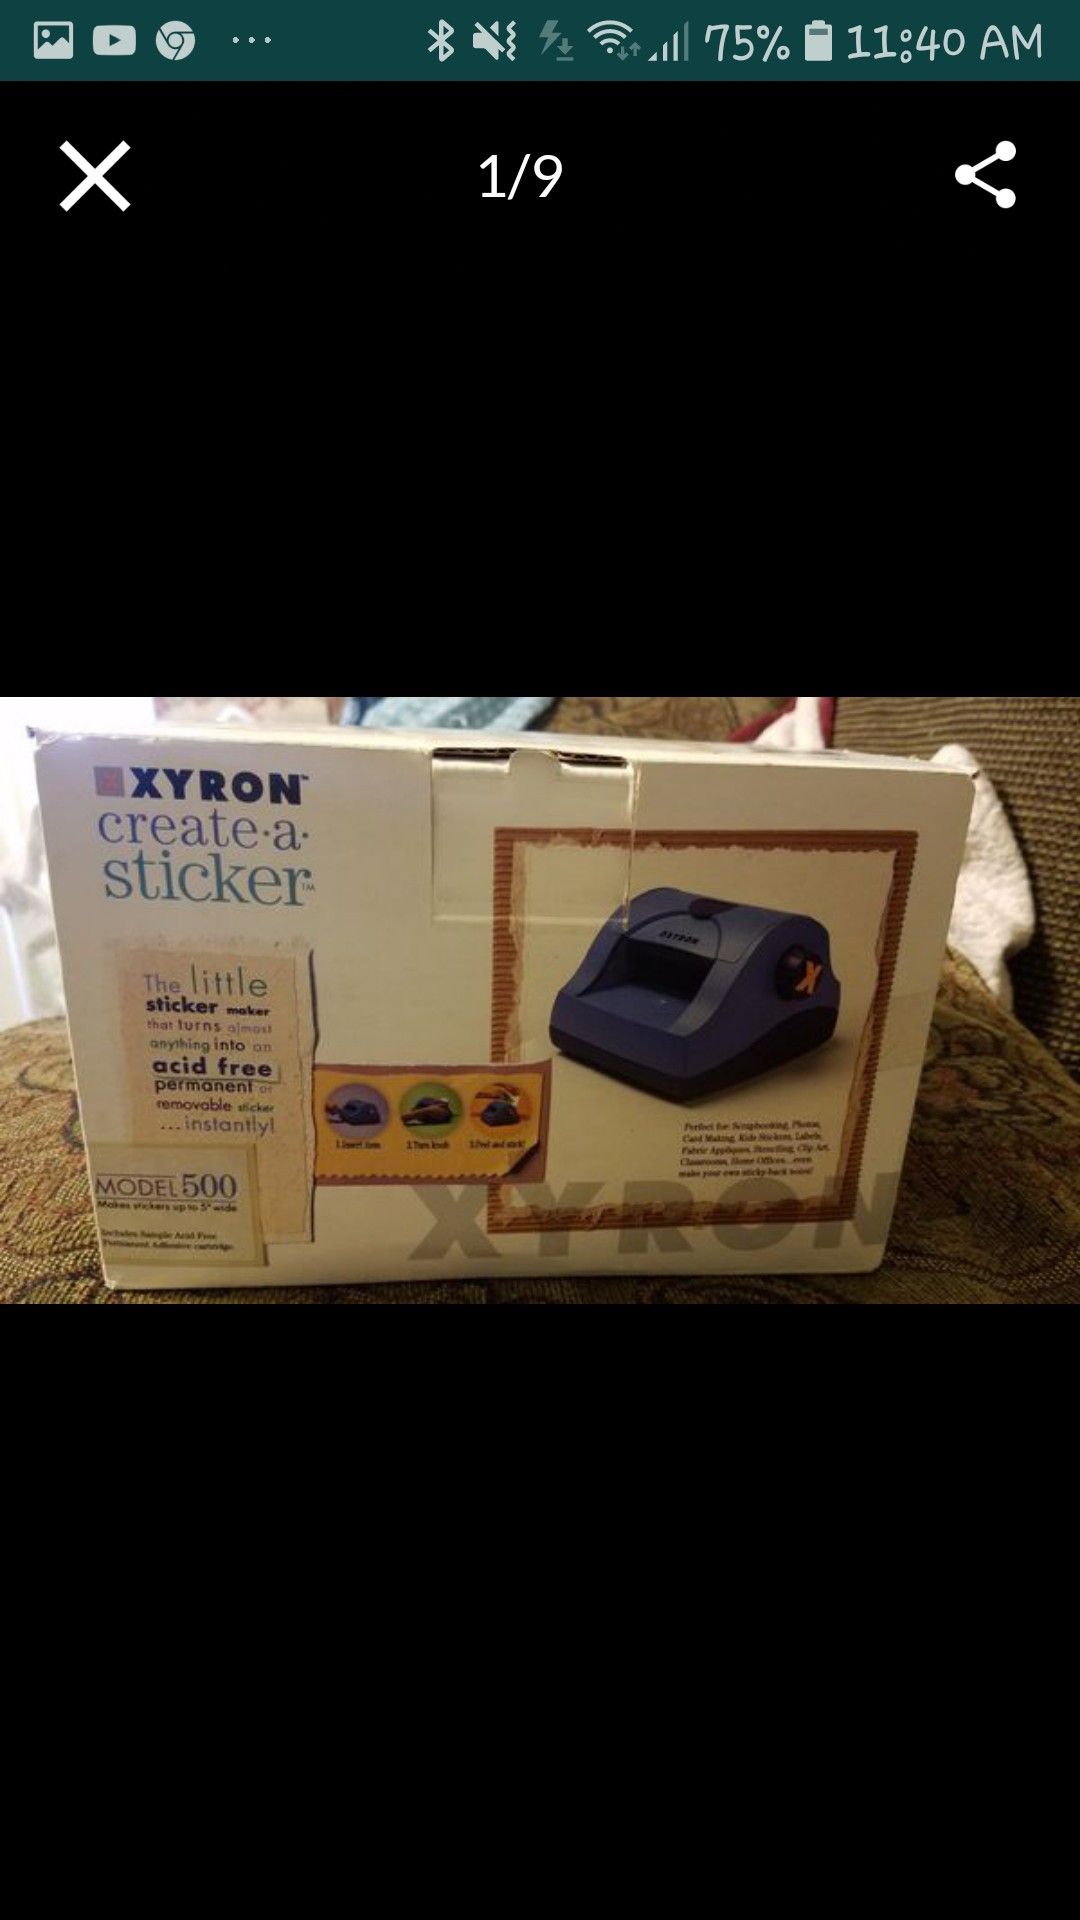 Xyron 500 Sticker machine, sold by CASSBOOKS